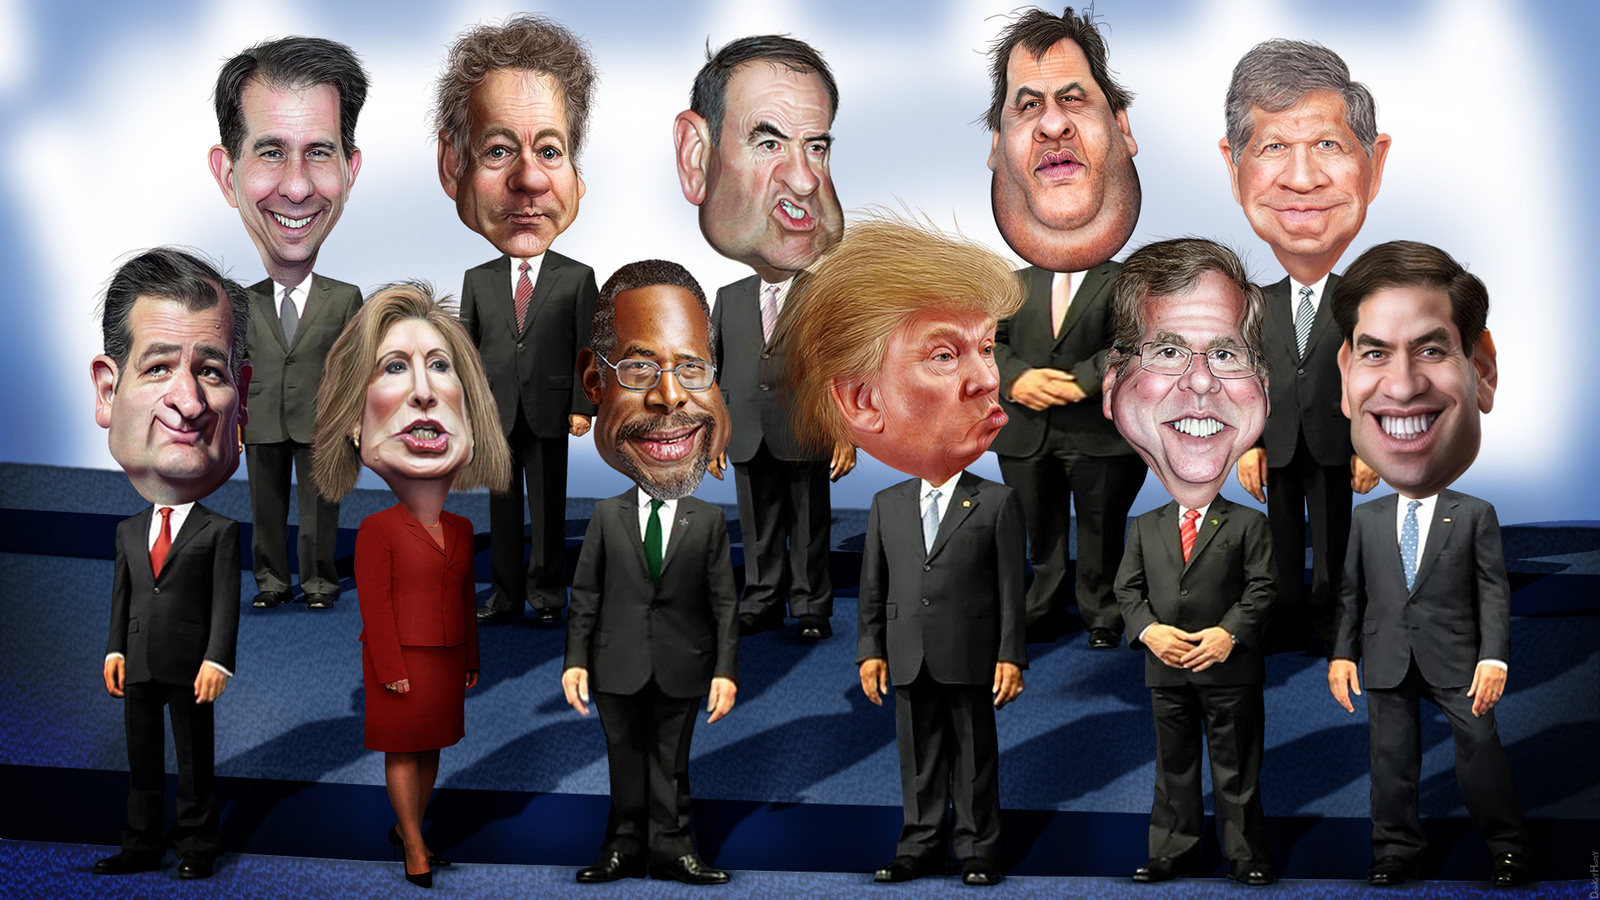 Caricature of GOP candidates